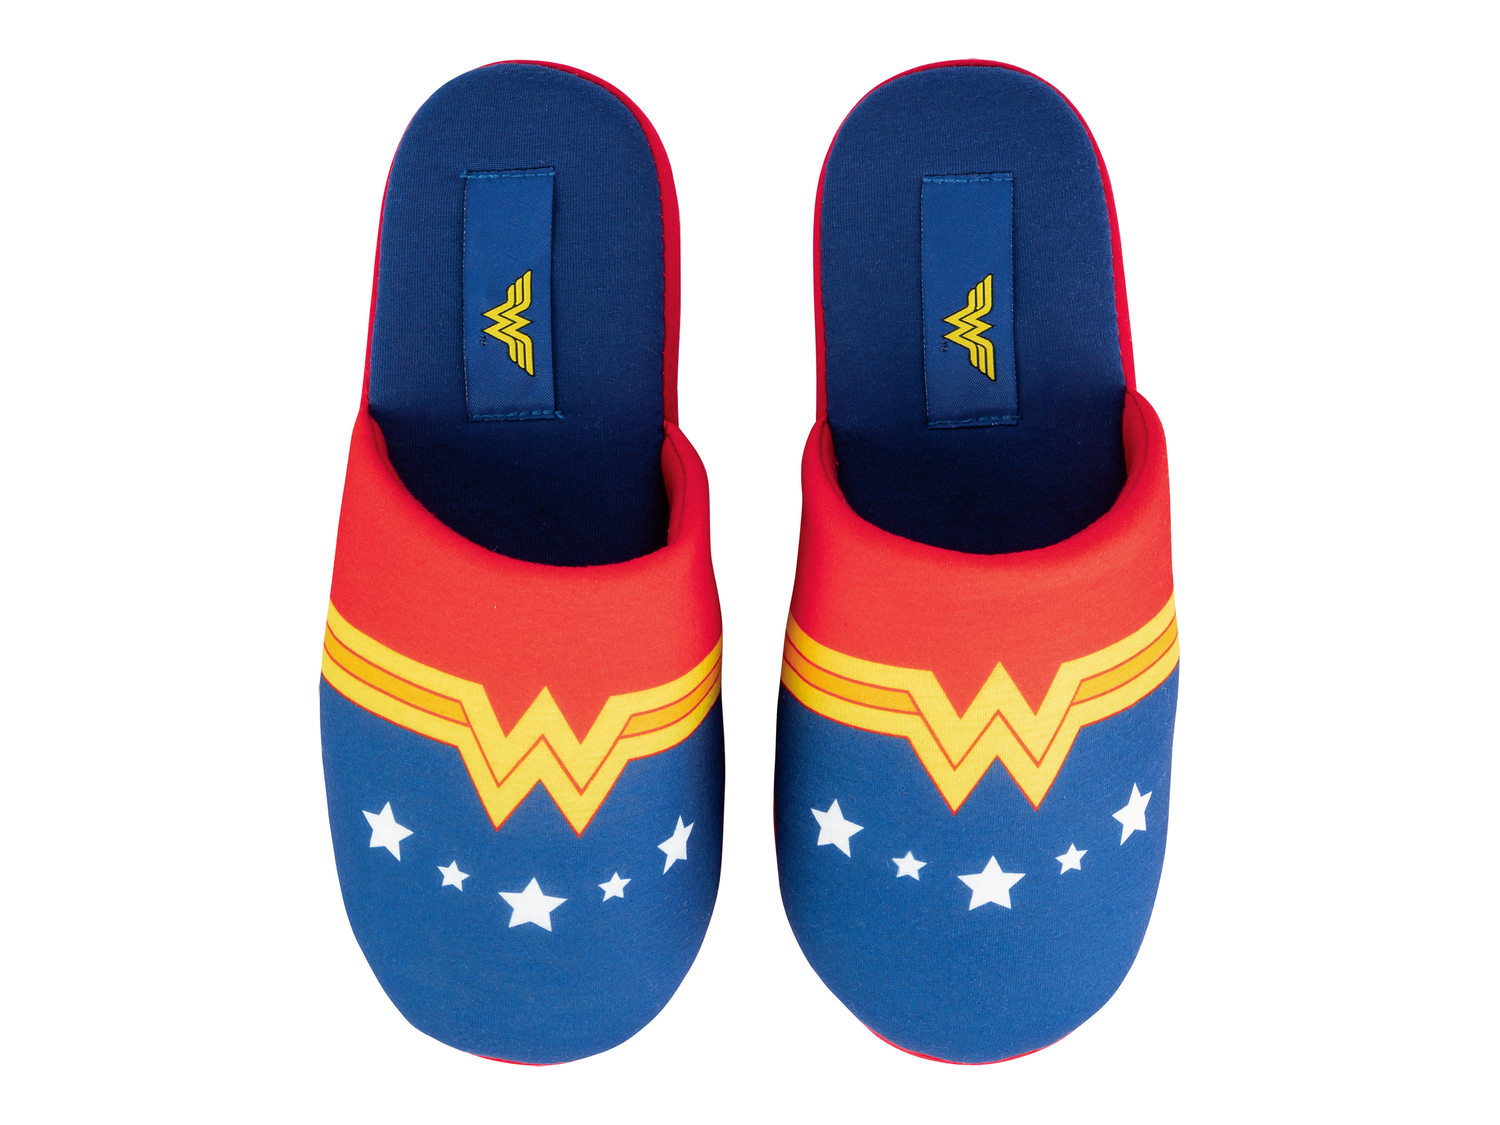 Pantofole da donna Snoopy, Wonder Woman, Mickey Mouse Prezzo-lidl, prezzo 5.99 € ...